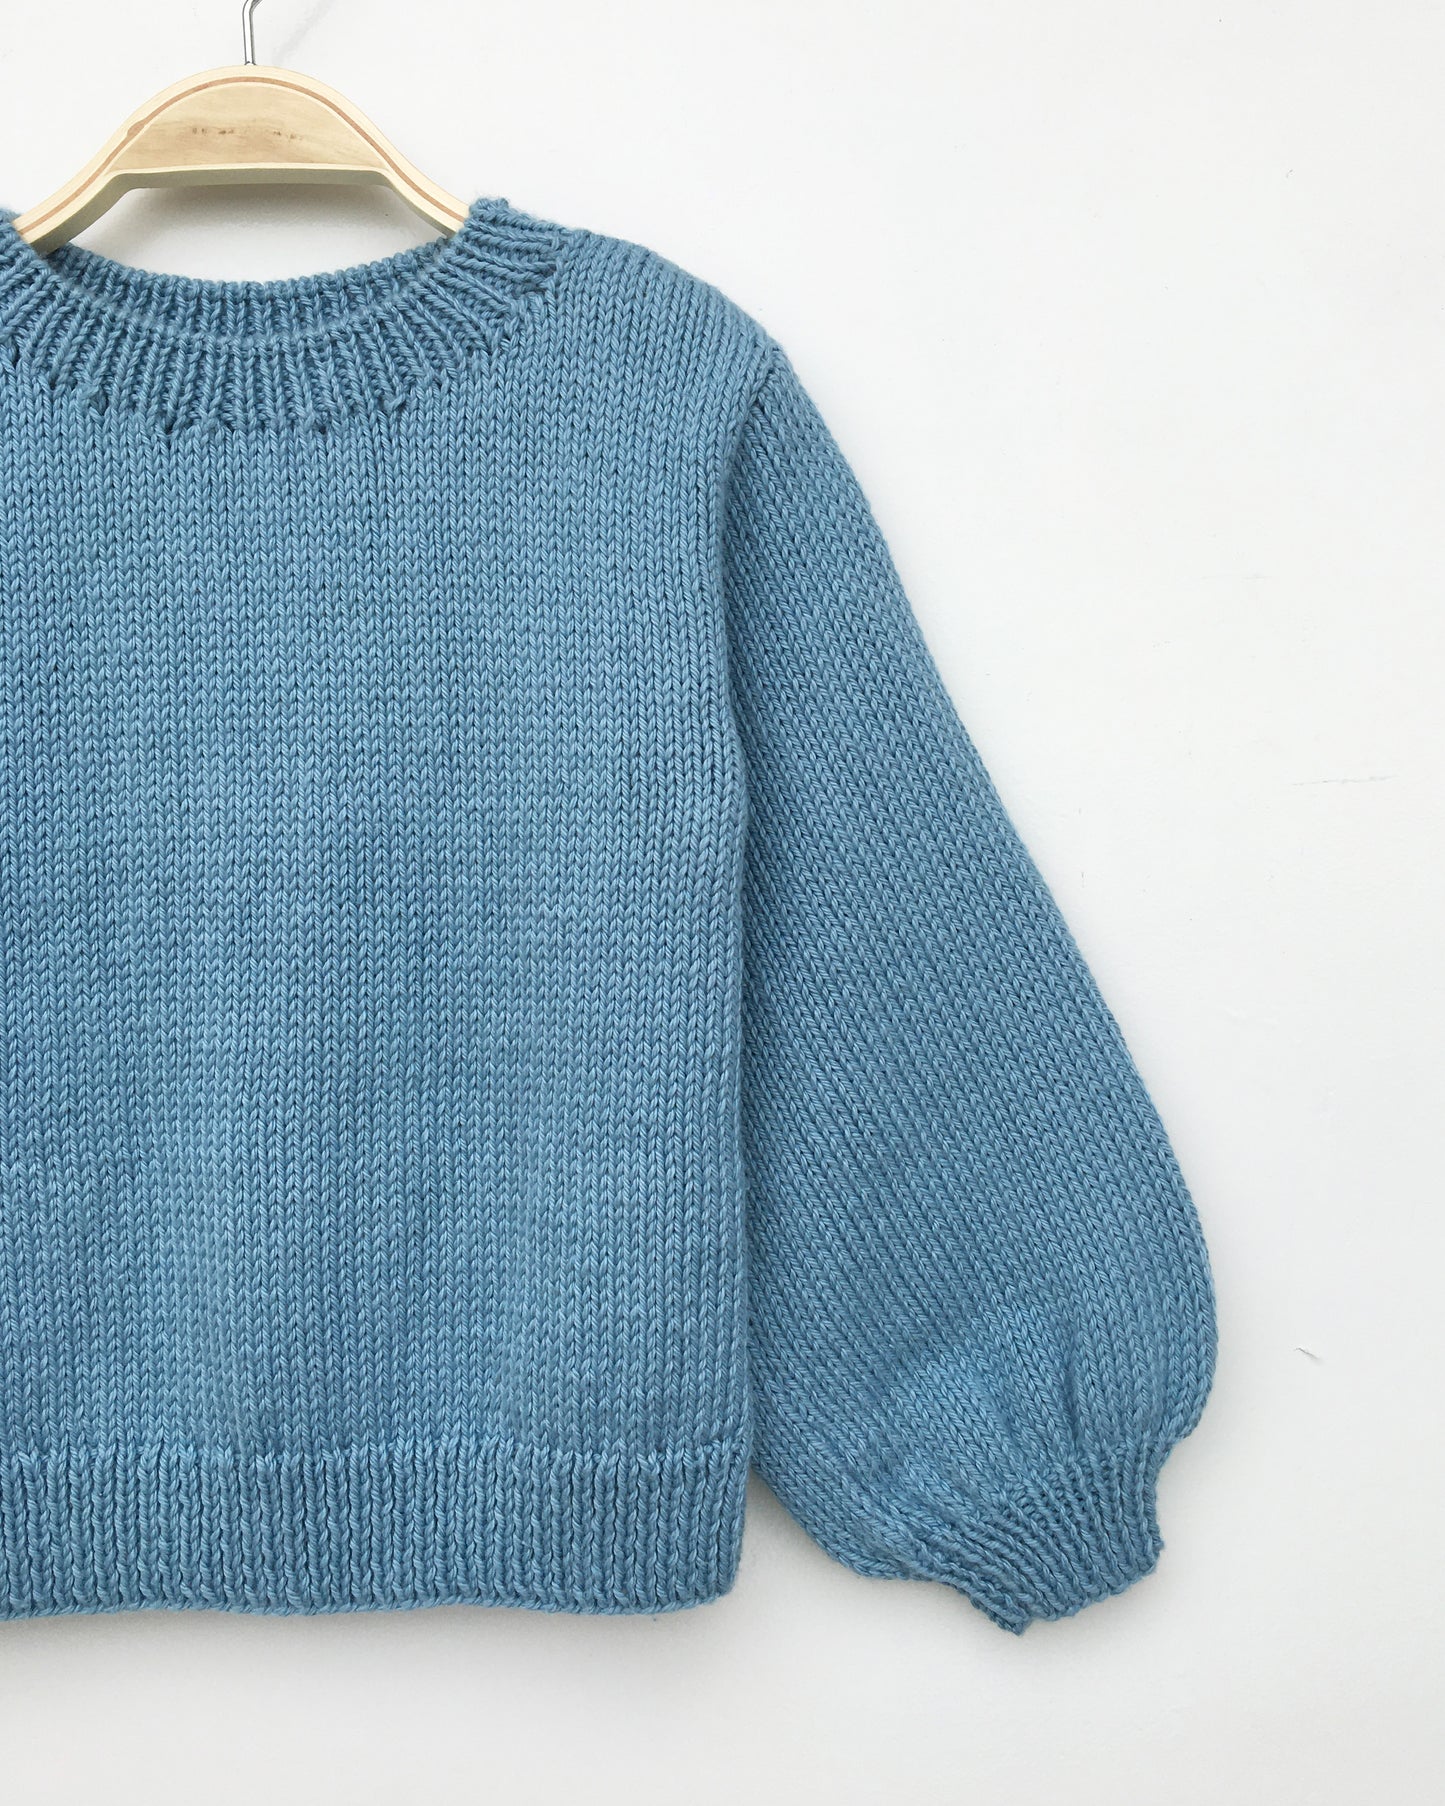 Kids' Sweater No.1 | Easy knitting pattern